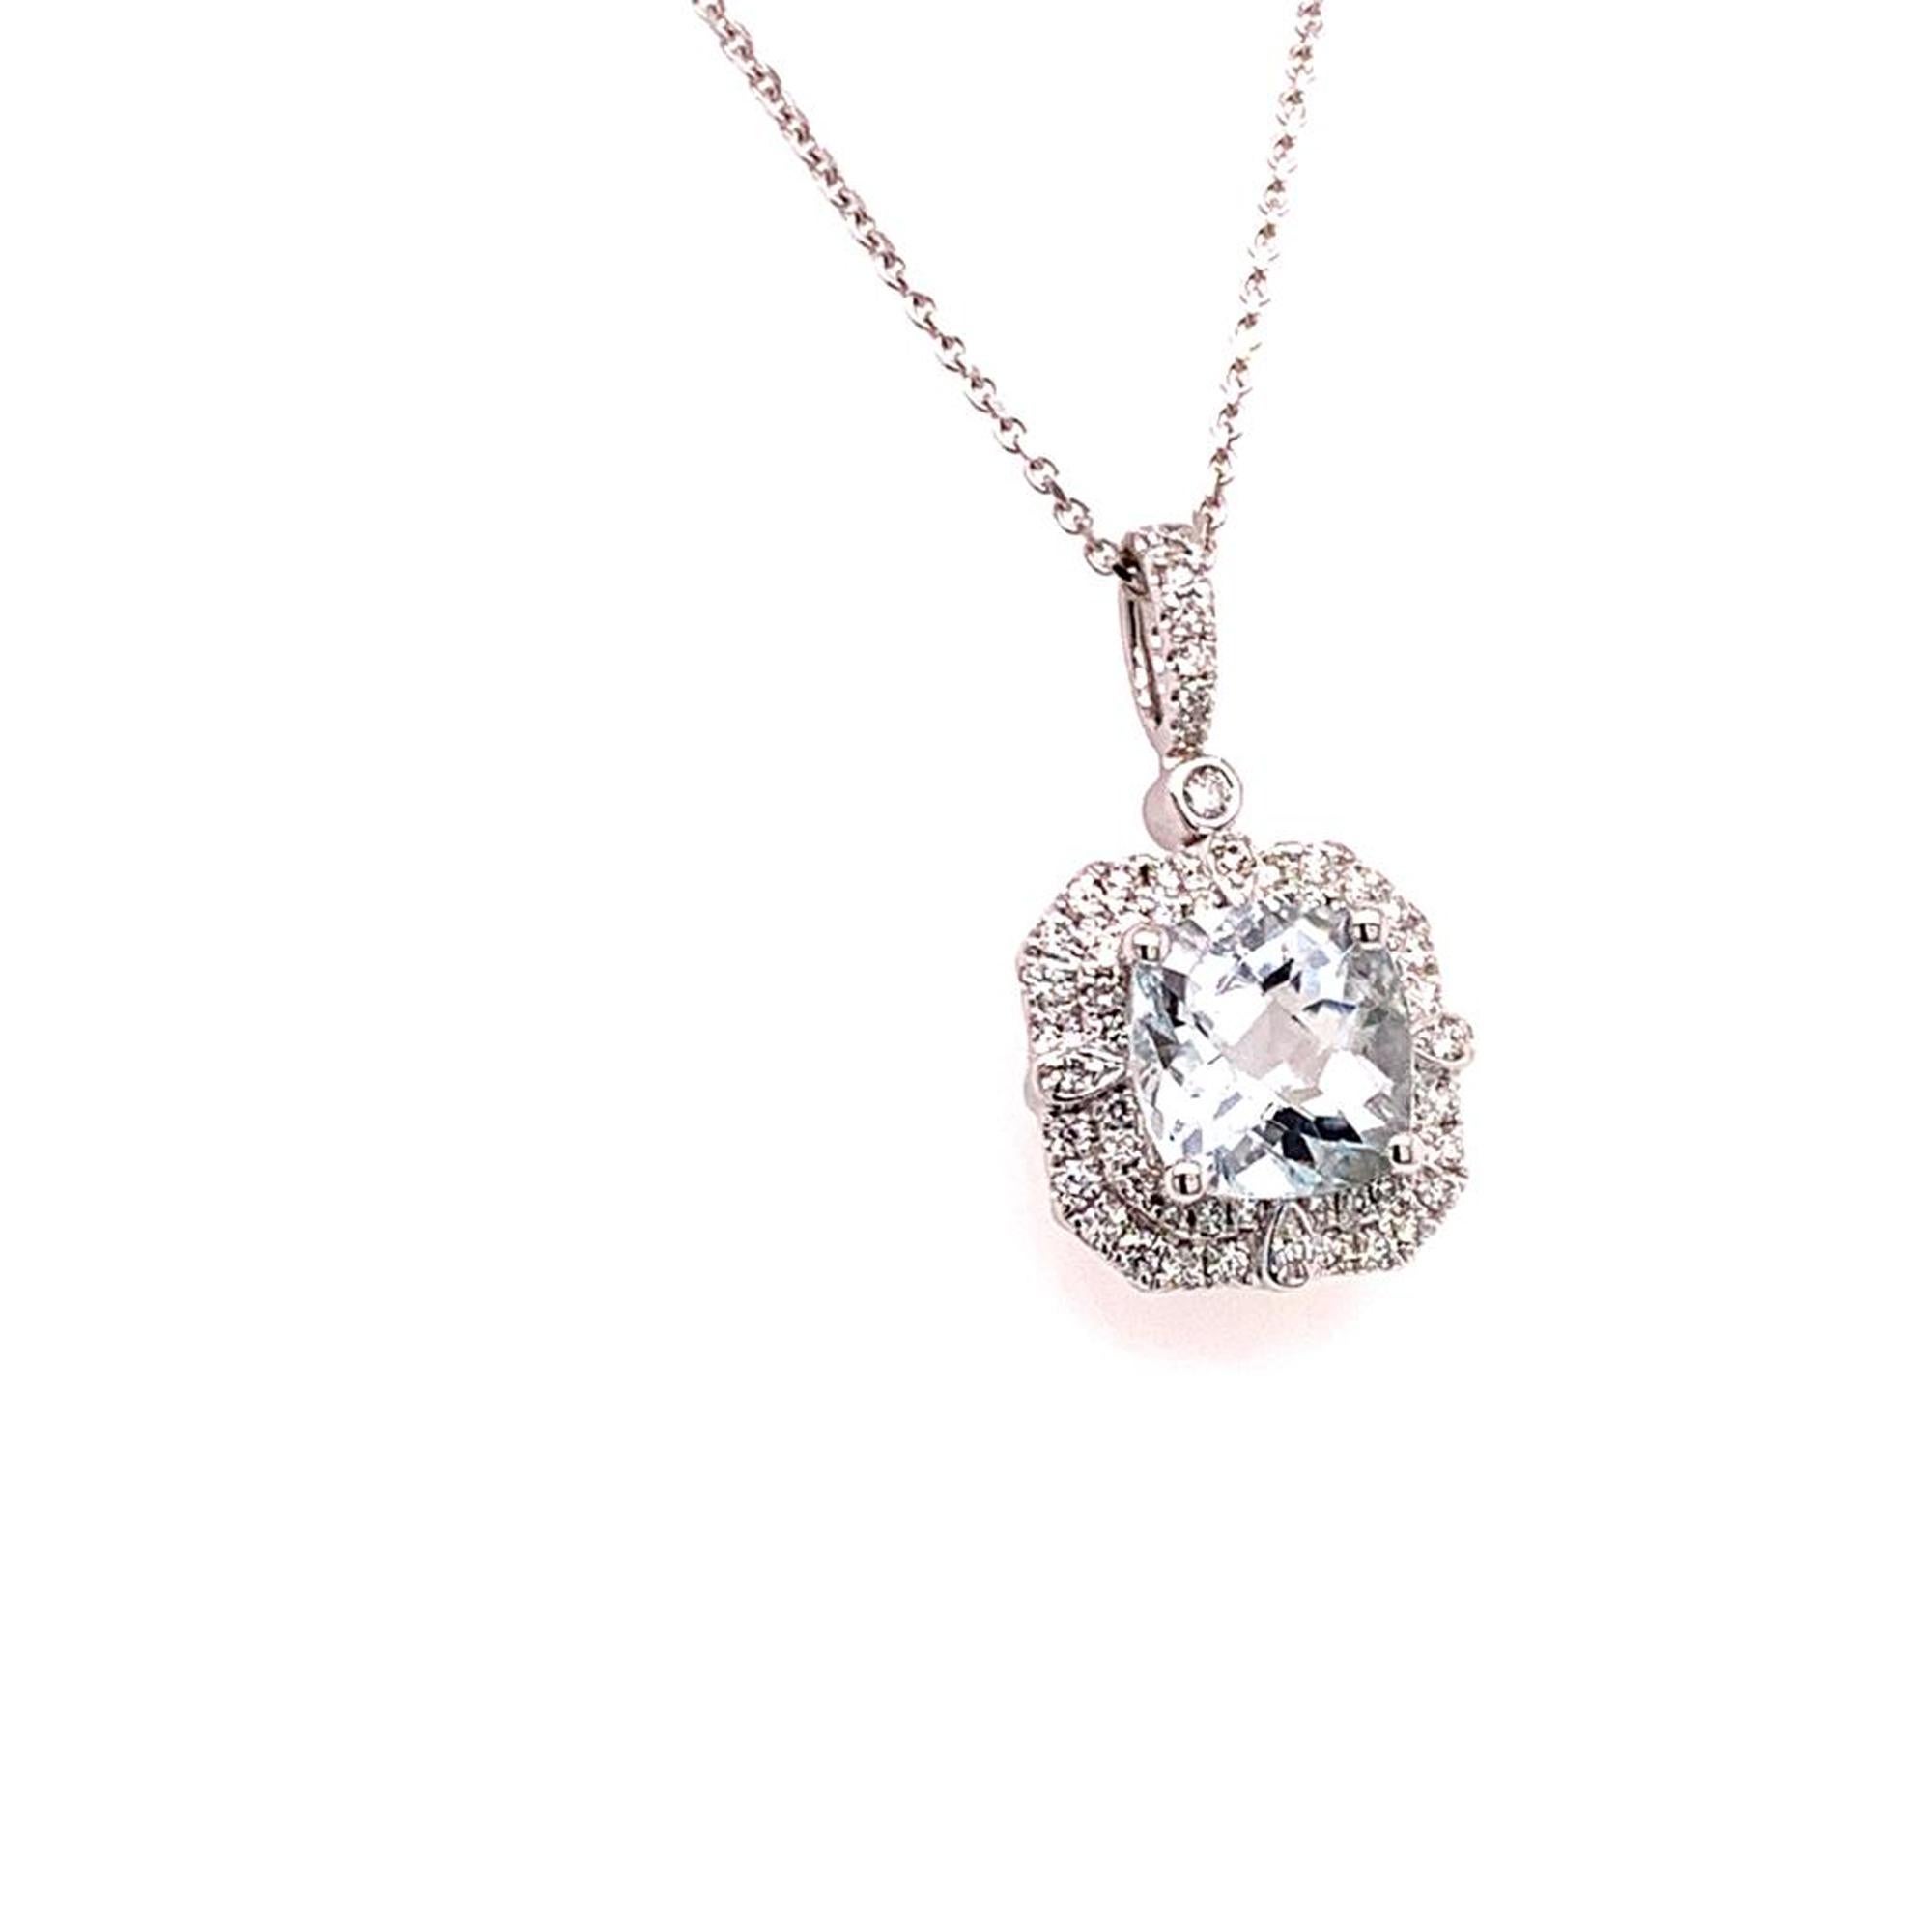 Cushion Cut Diamond Aquamarine Necklace 18k Gold 2.24 TCW Certified For Sale